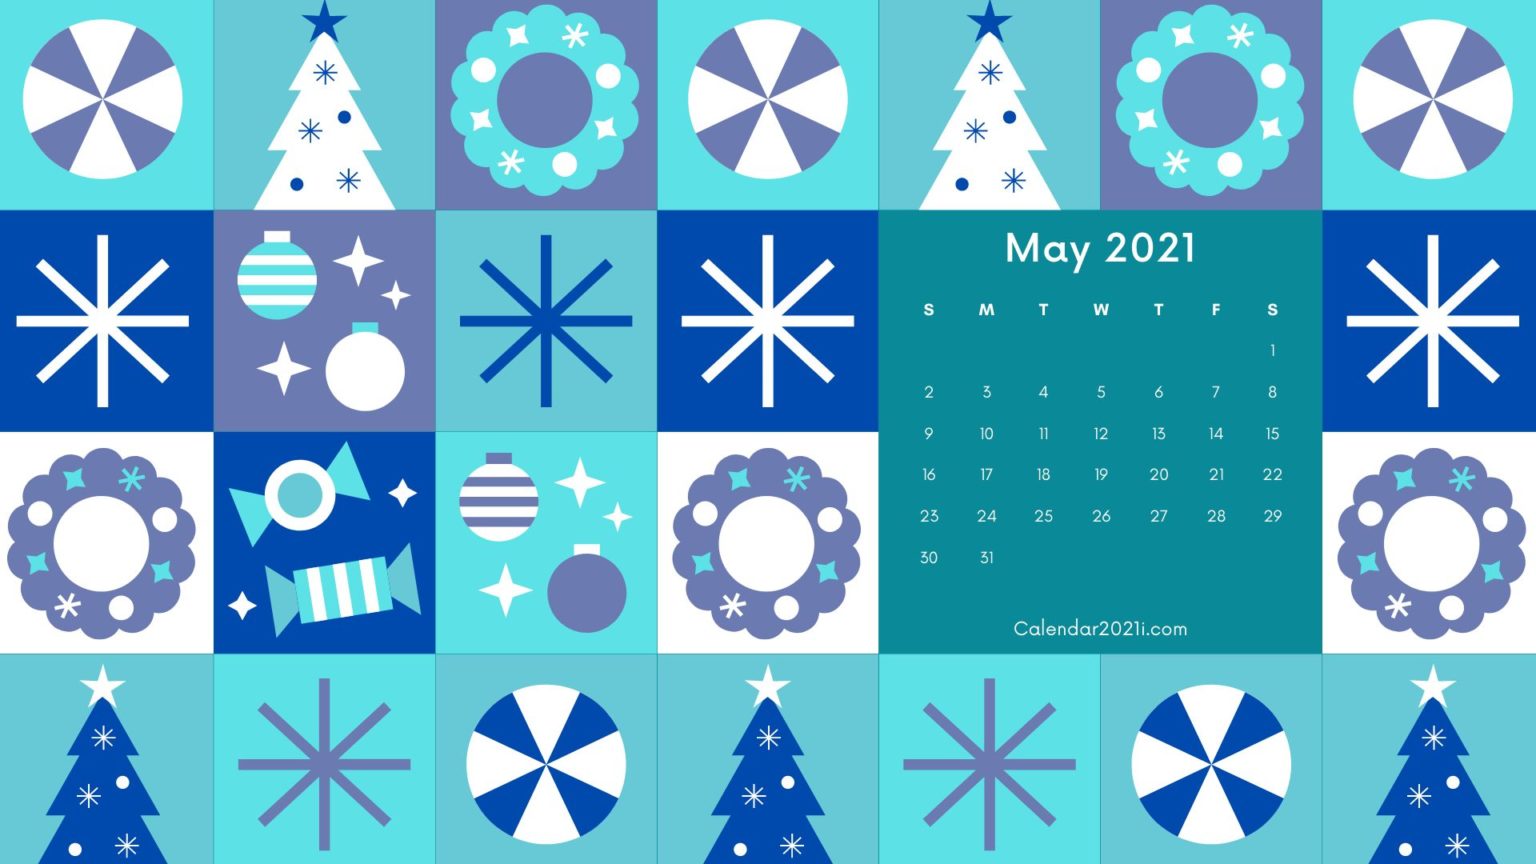 May 2021 Calendar Wallpaper